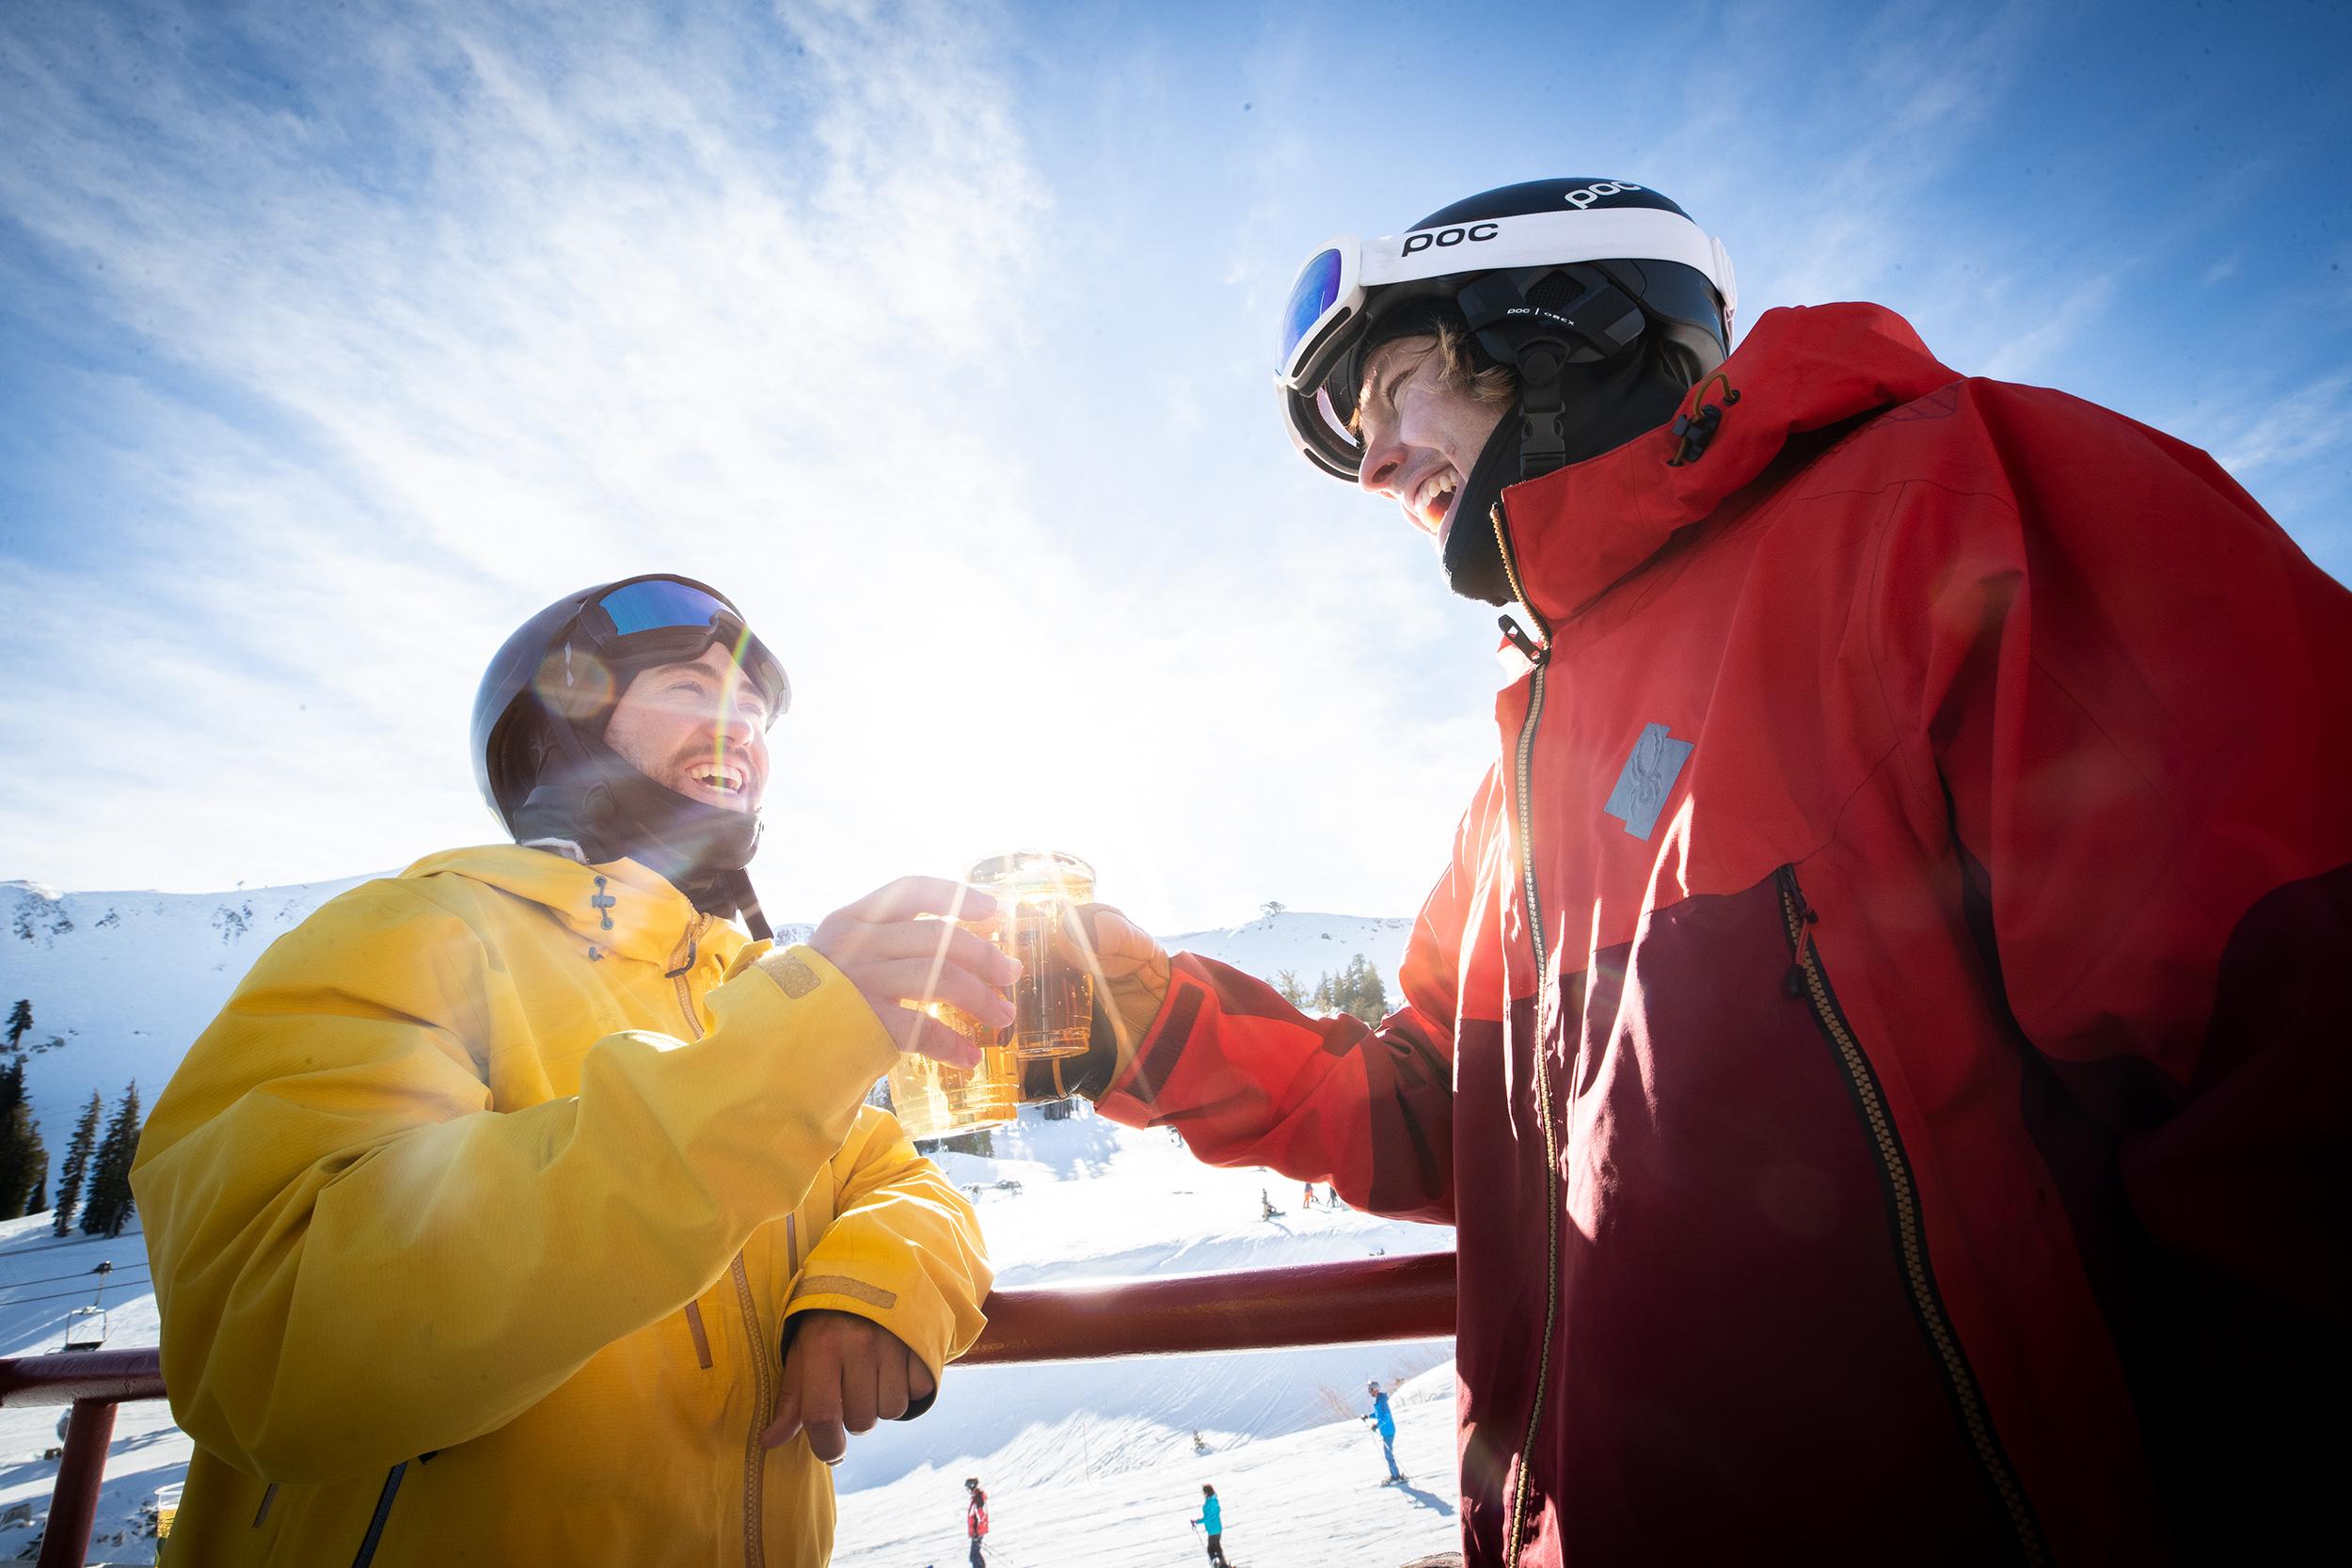 Two people in ski gear toasting beers